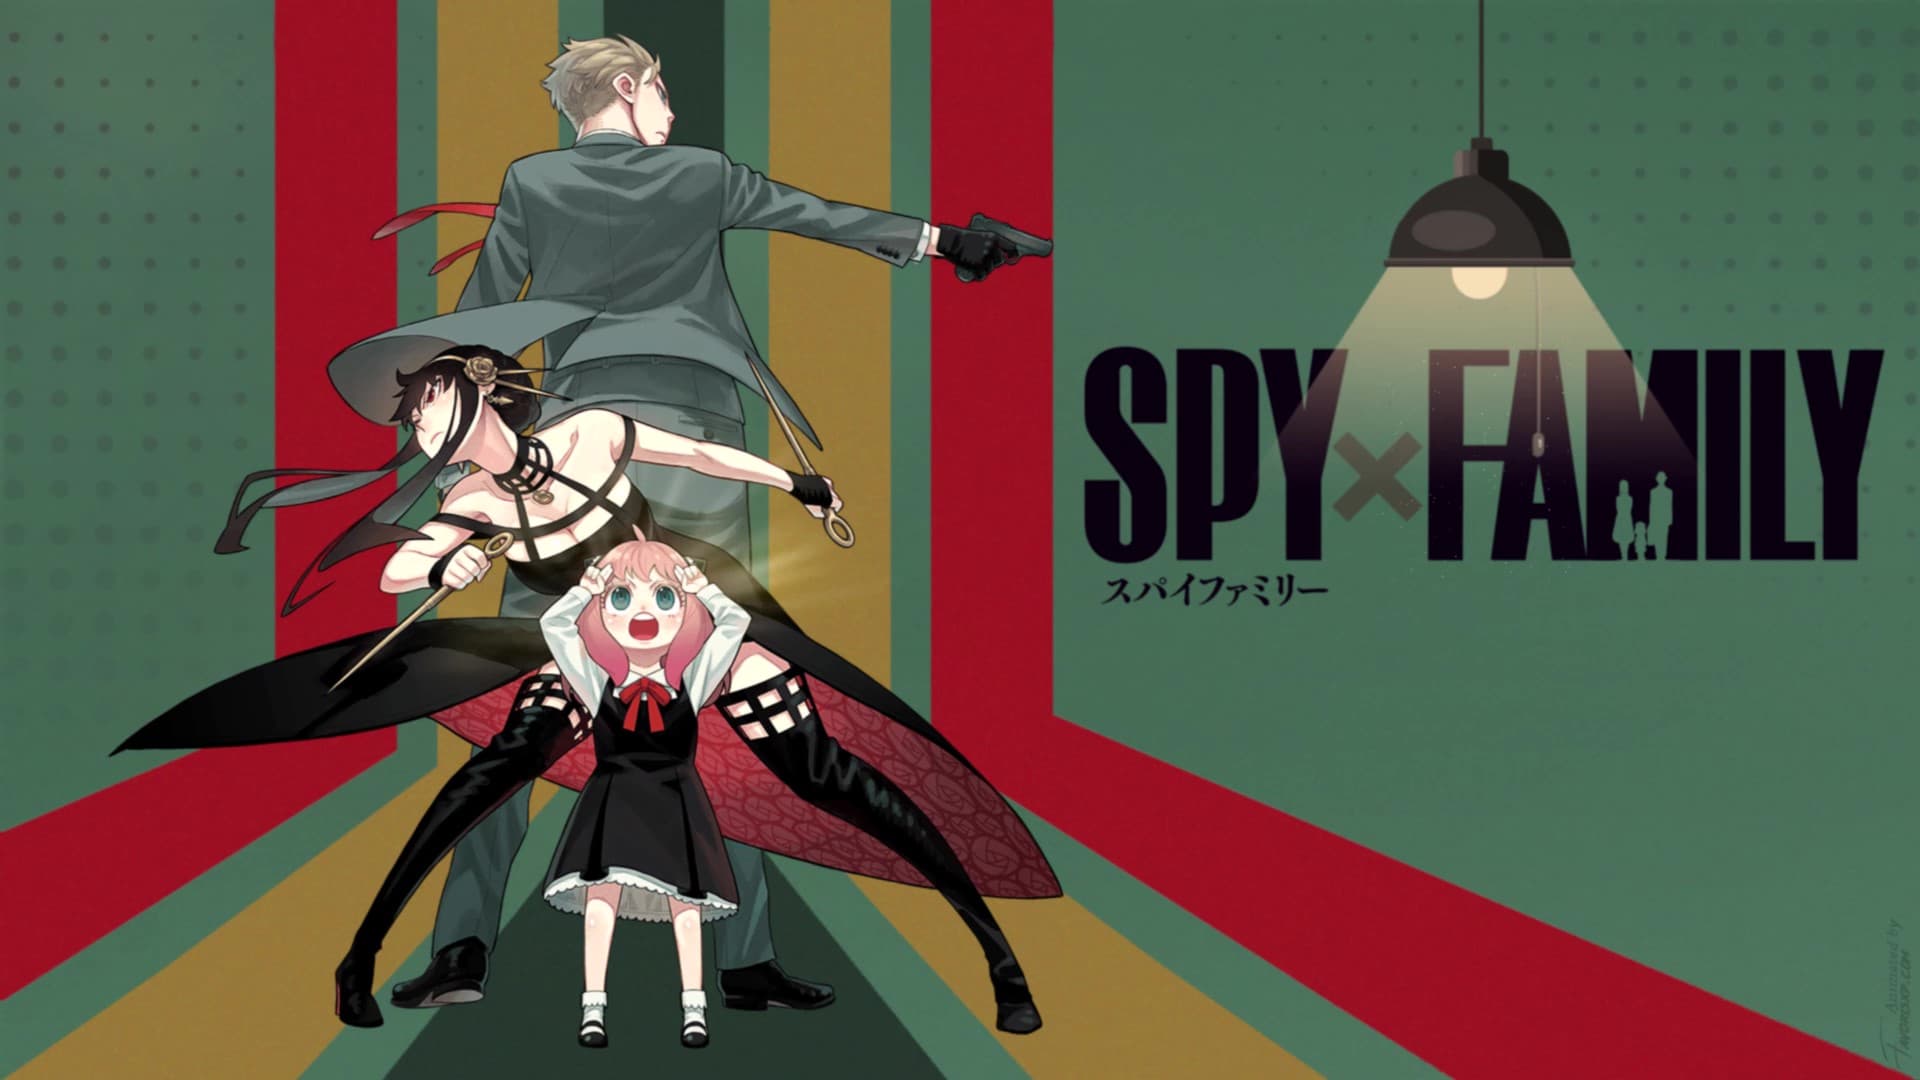 Spy x Family - Live Wallpaper for PC by Favorisxp on DeviantArt